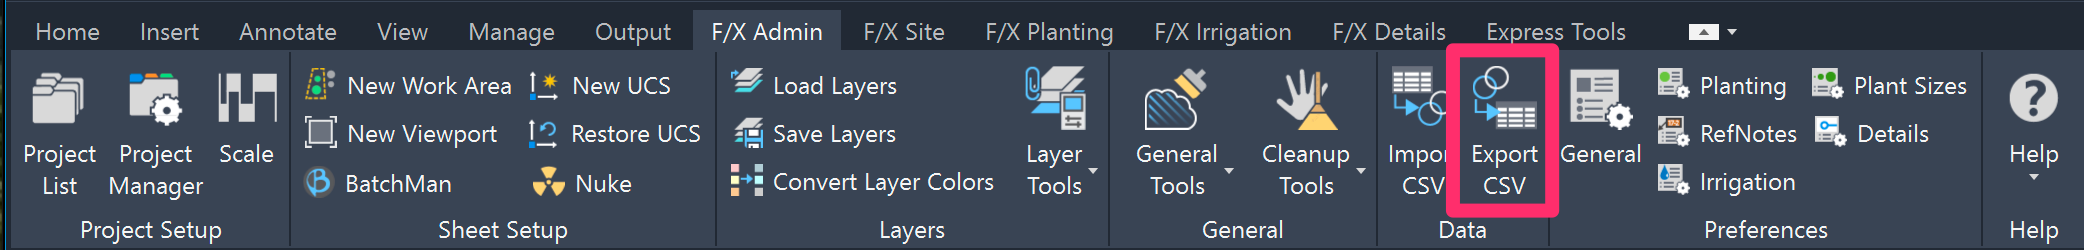 F/X Admin ribbon, Export CSV button